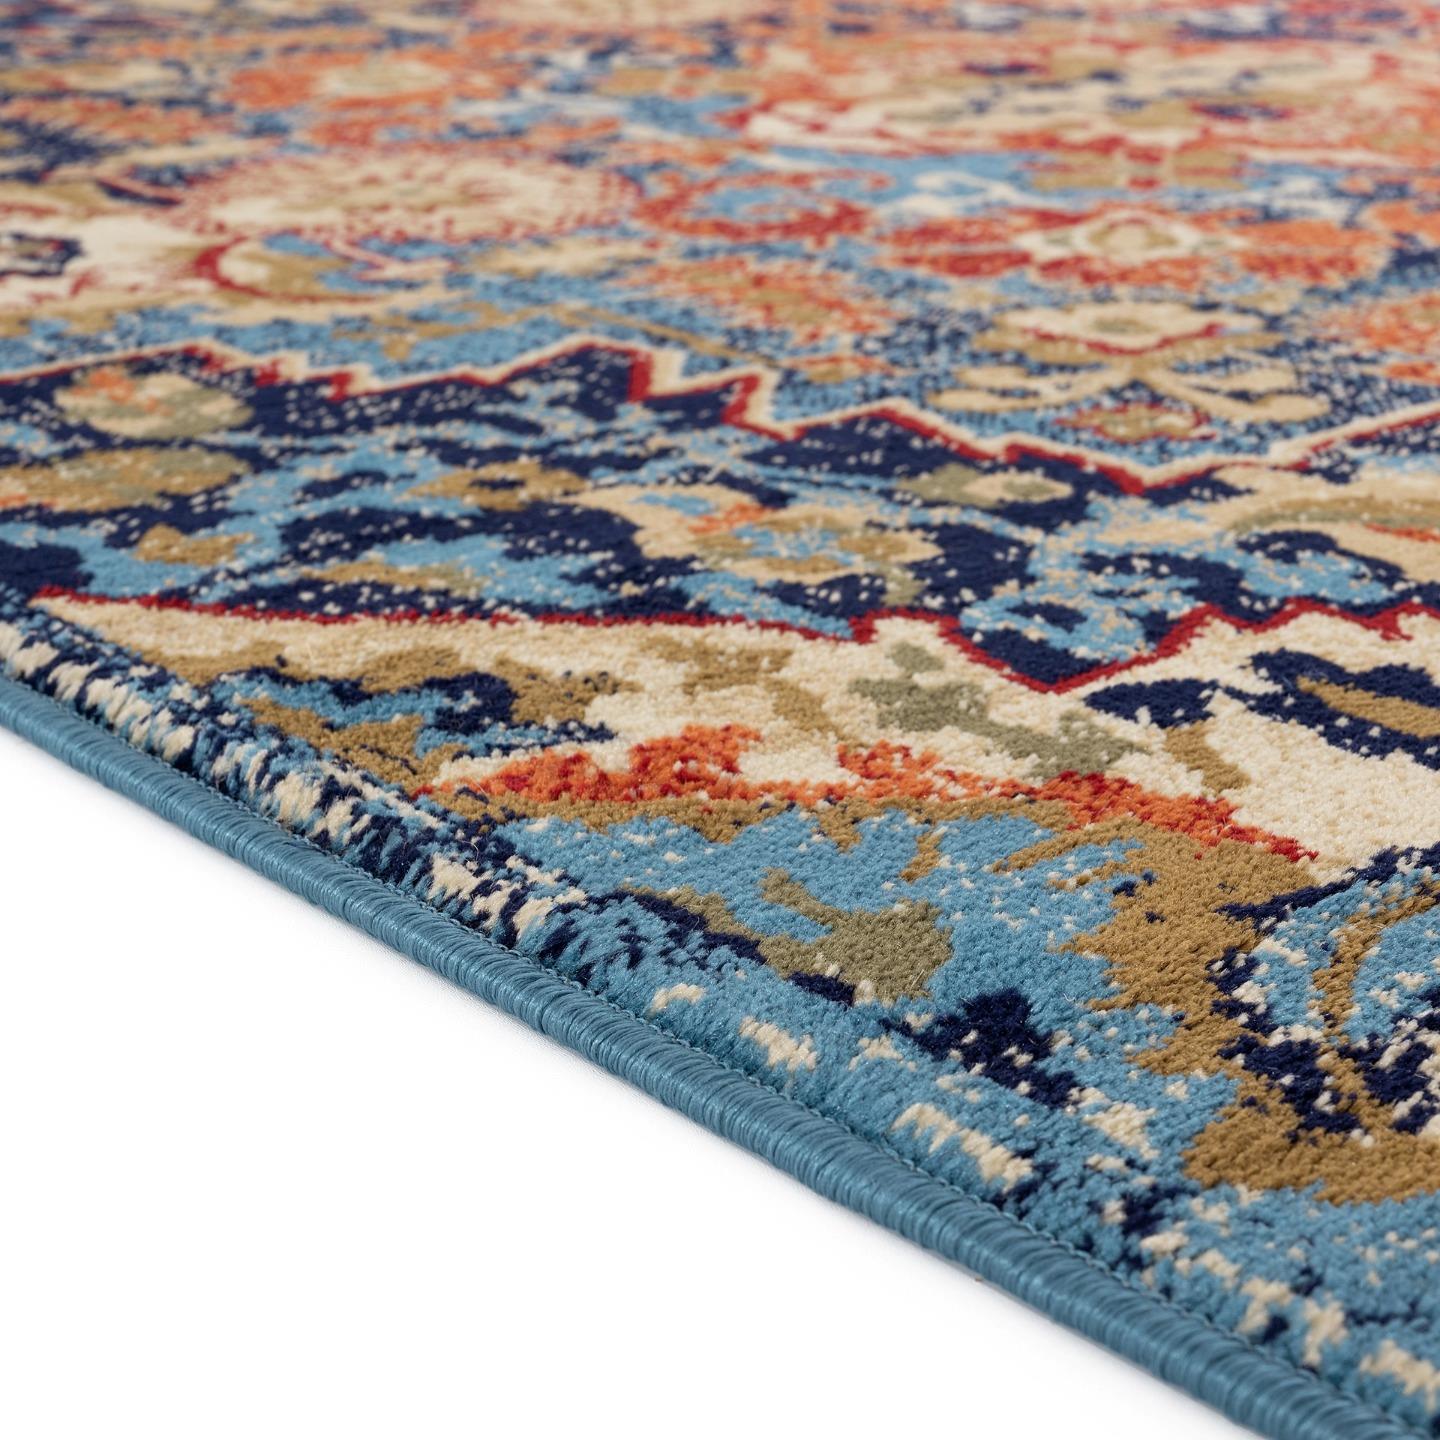 Luxe Weavers Oriental Blue 8x10 Vintage Area Rug, Southwestern Geometric Carpet - image 5 of 6